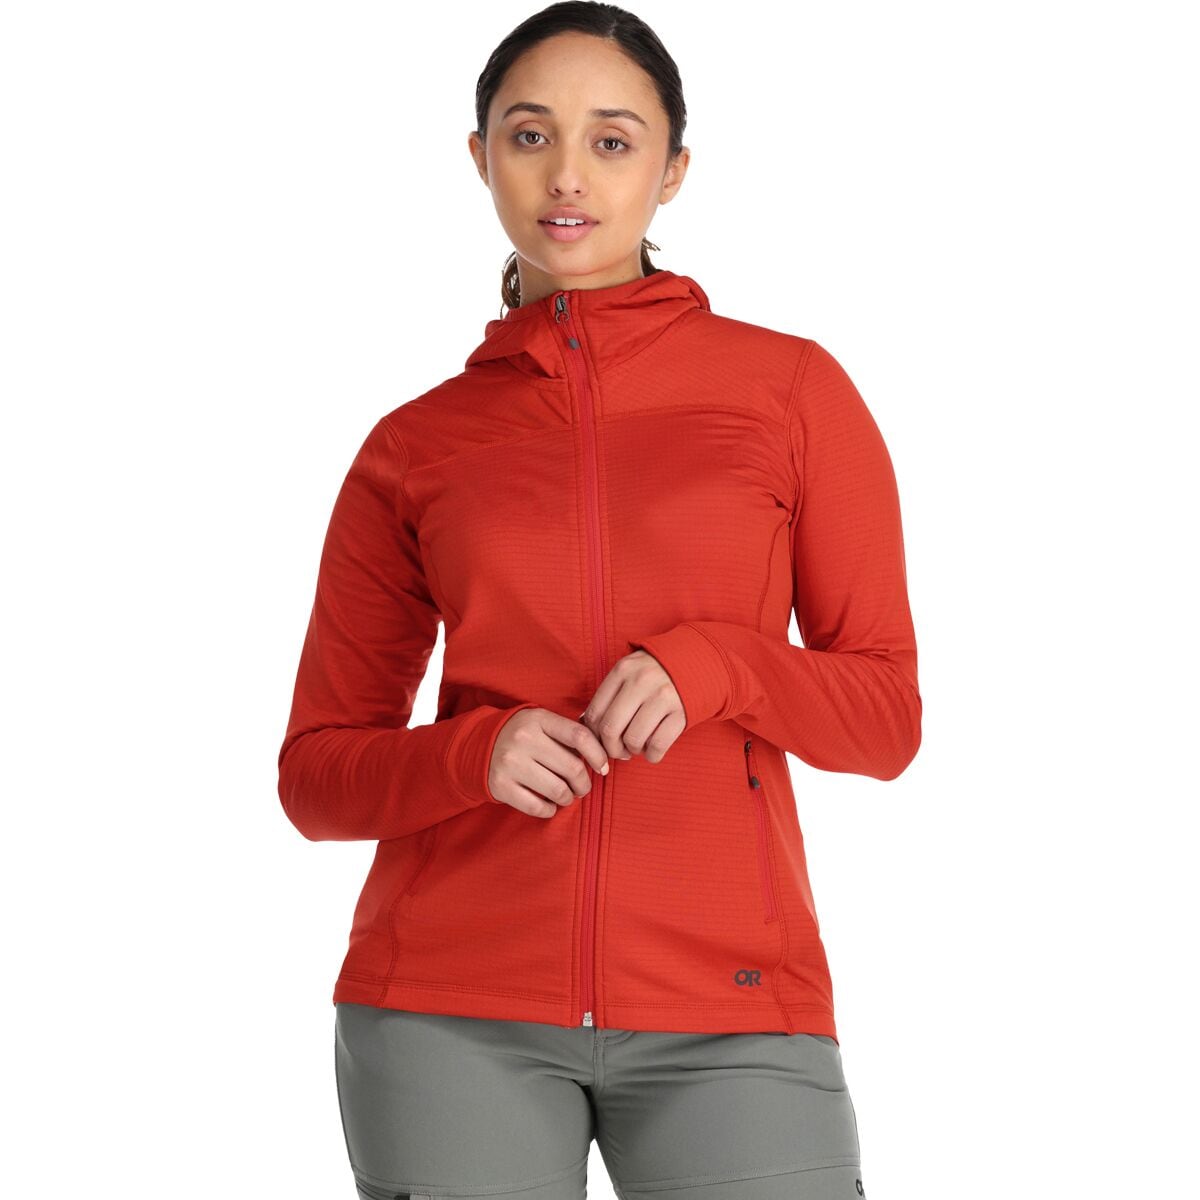 Outdoor Research Vigor Full Zip Hooded Jacket - Women's - Clothing